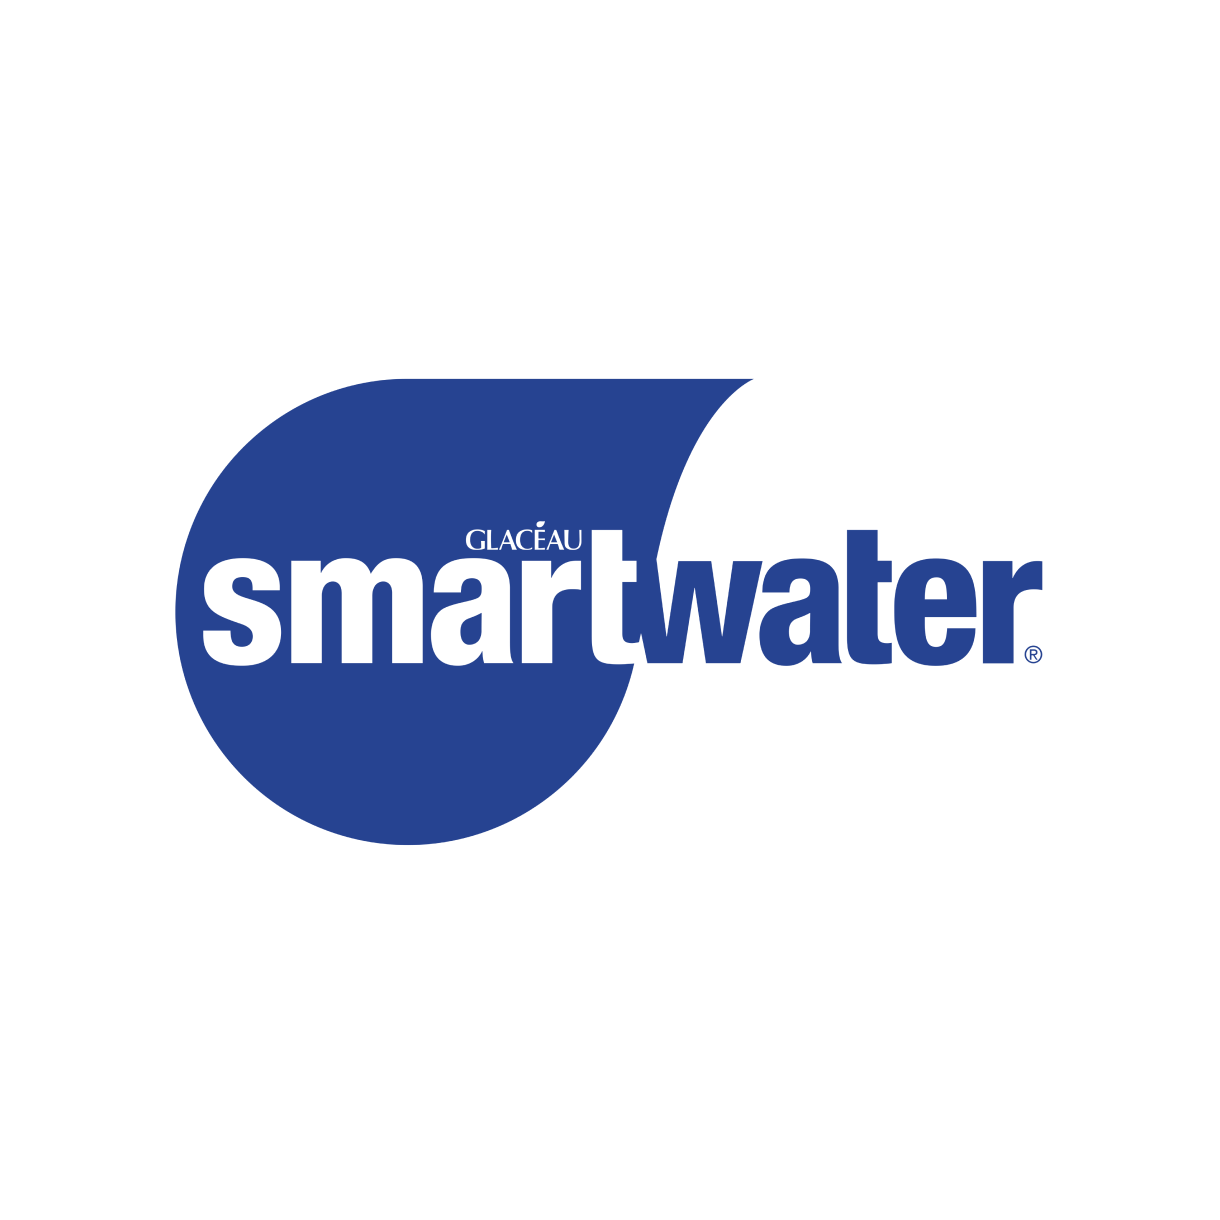 Smartwater logo